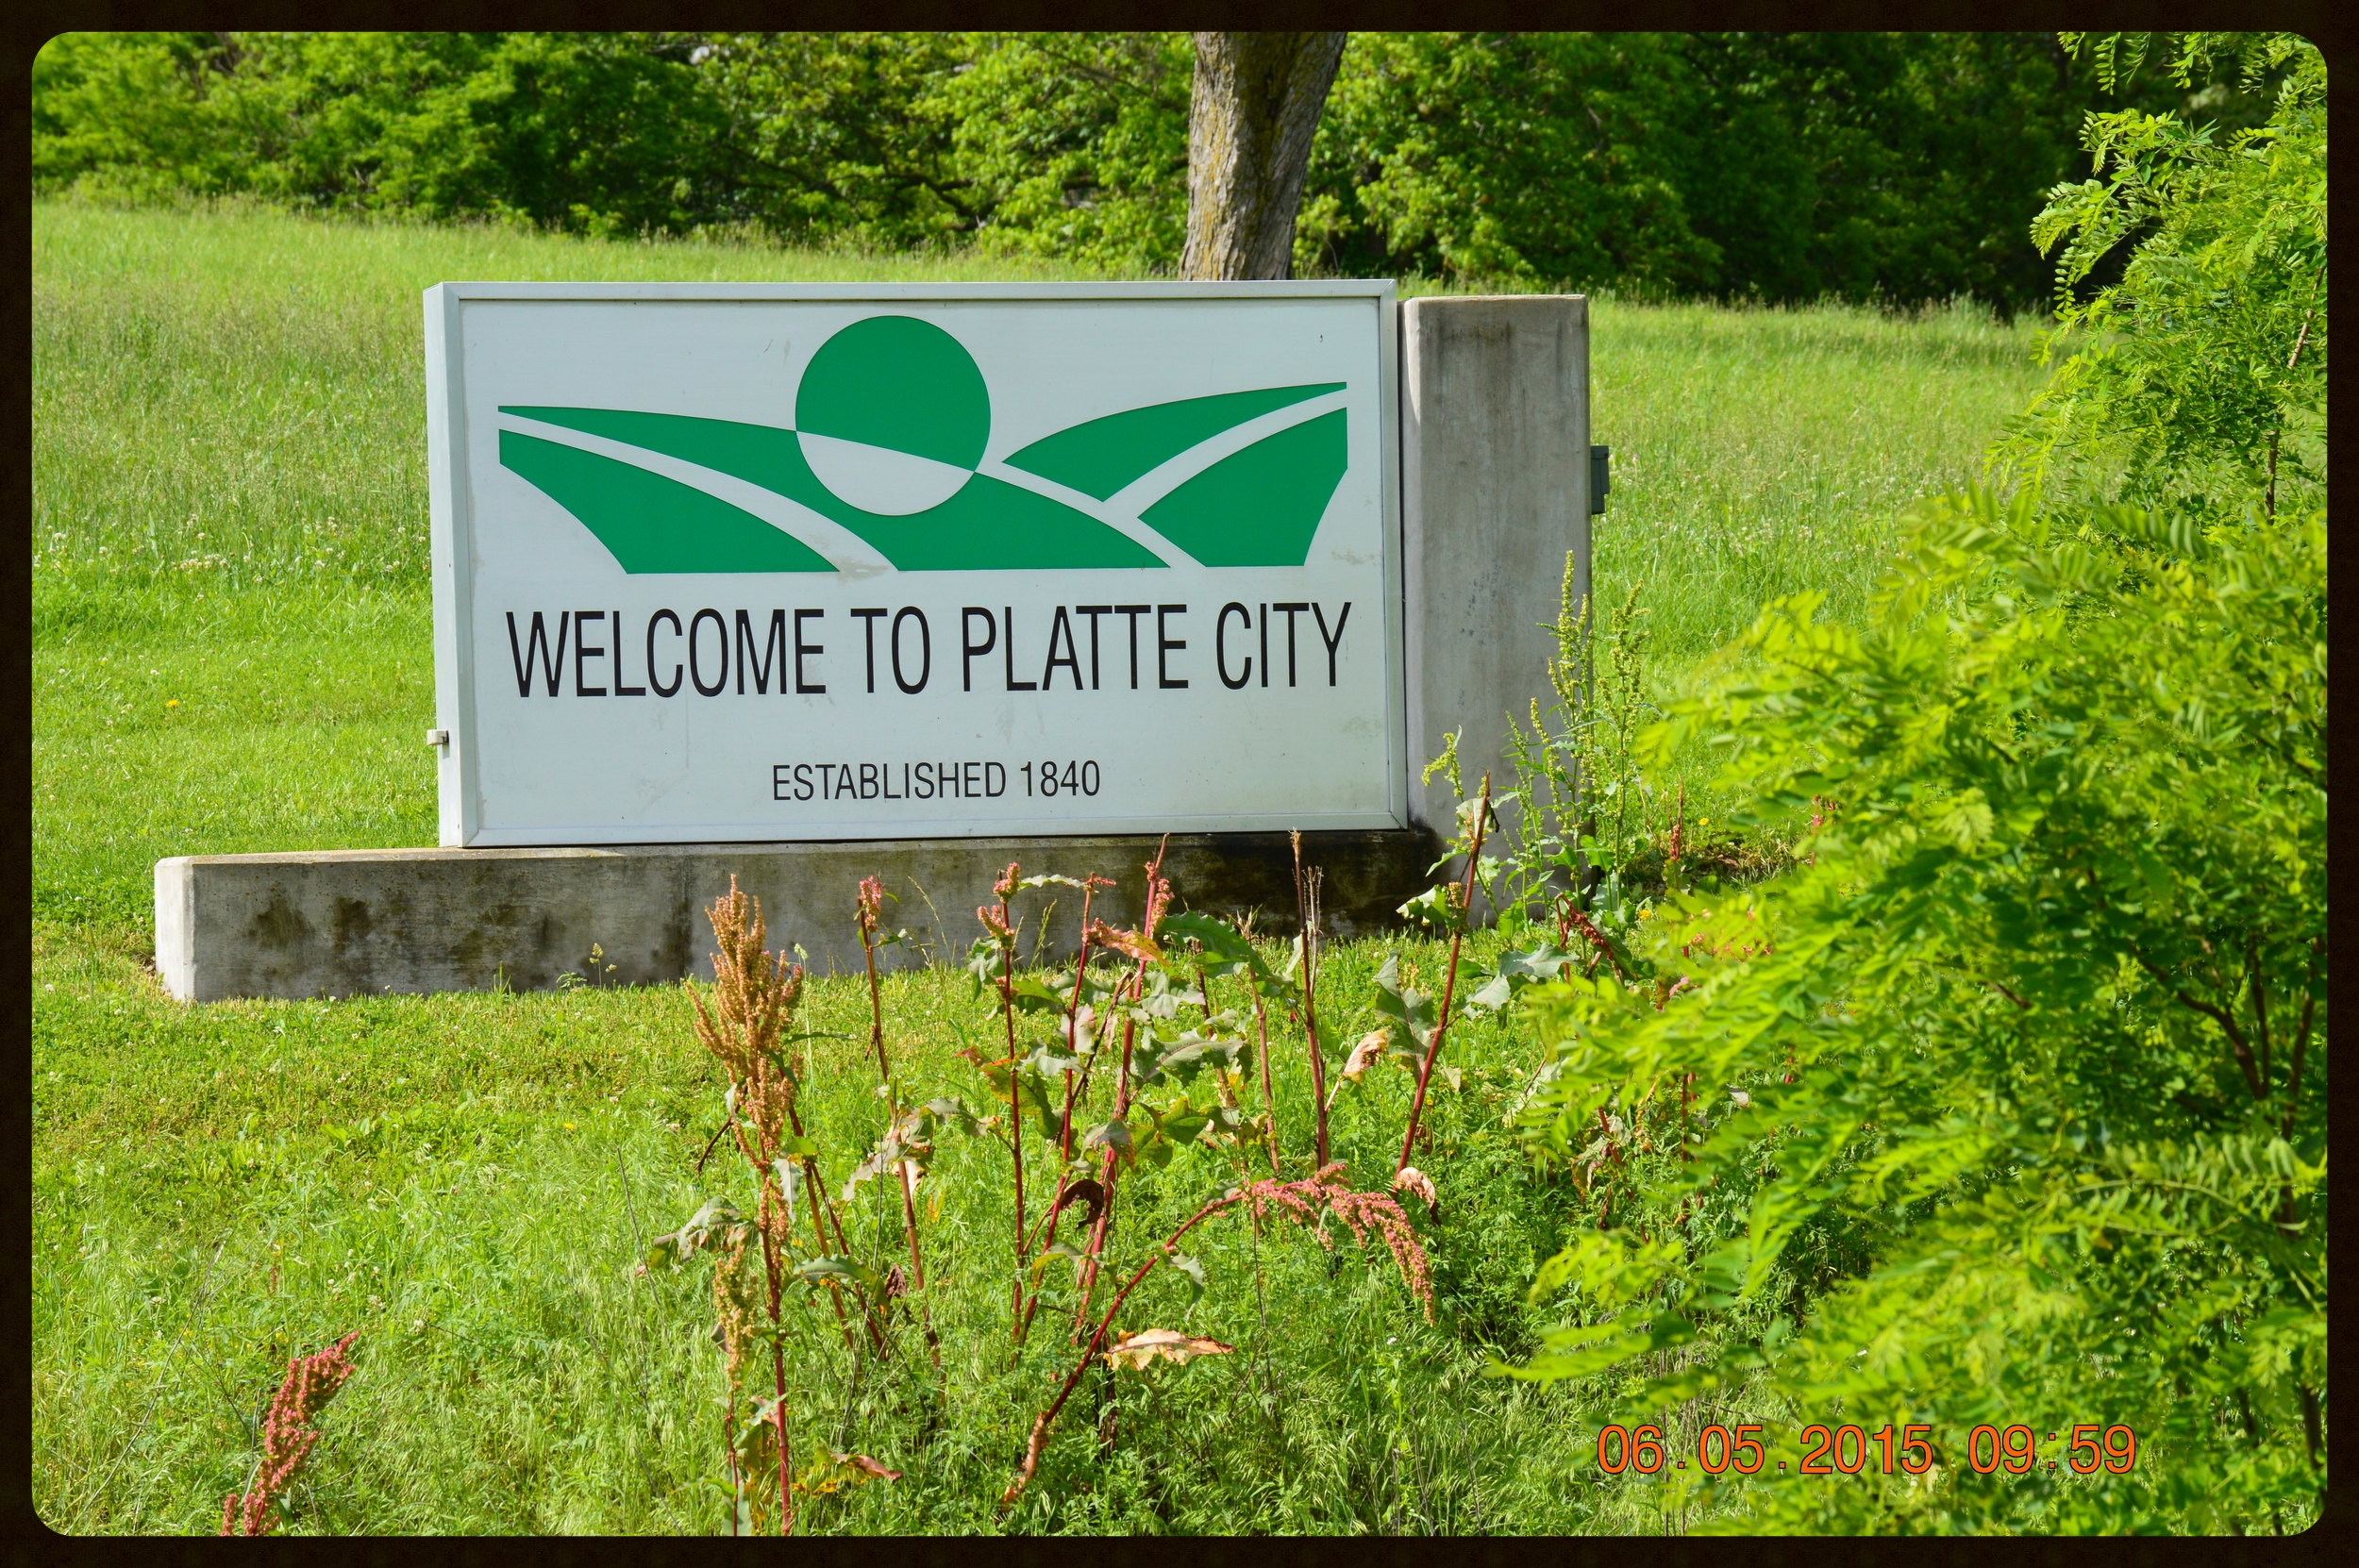 City of Platte City